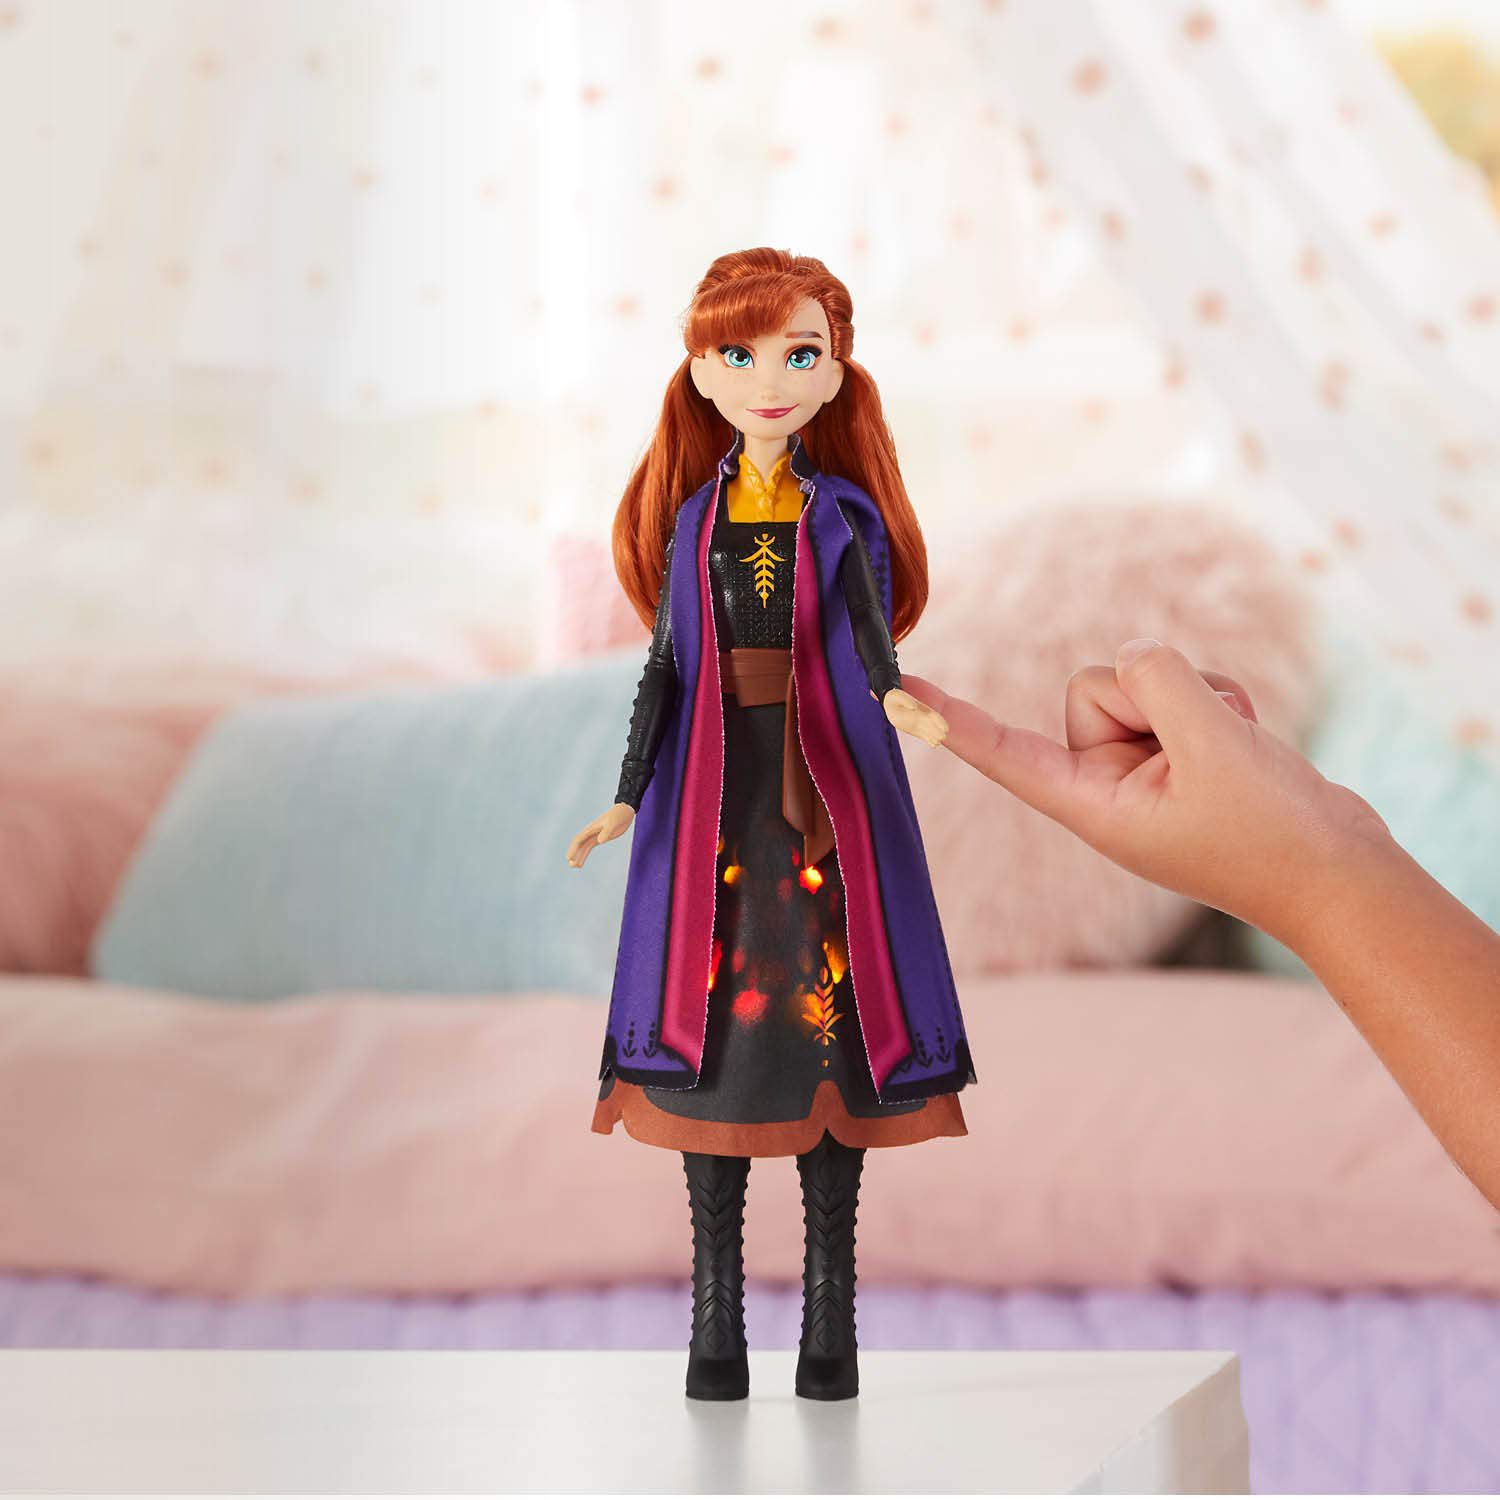 Boneca Frozen 2  Anna Aventura Musical - Hasbro